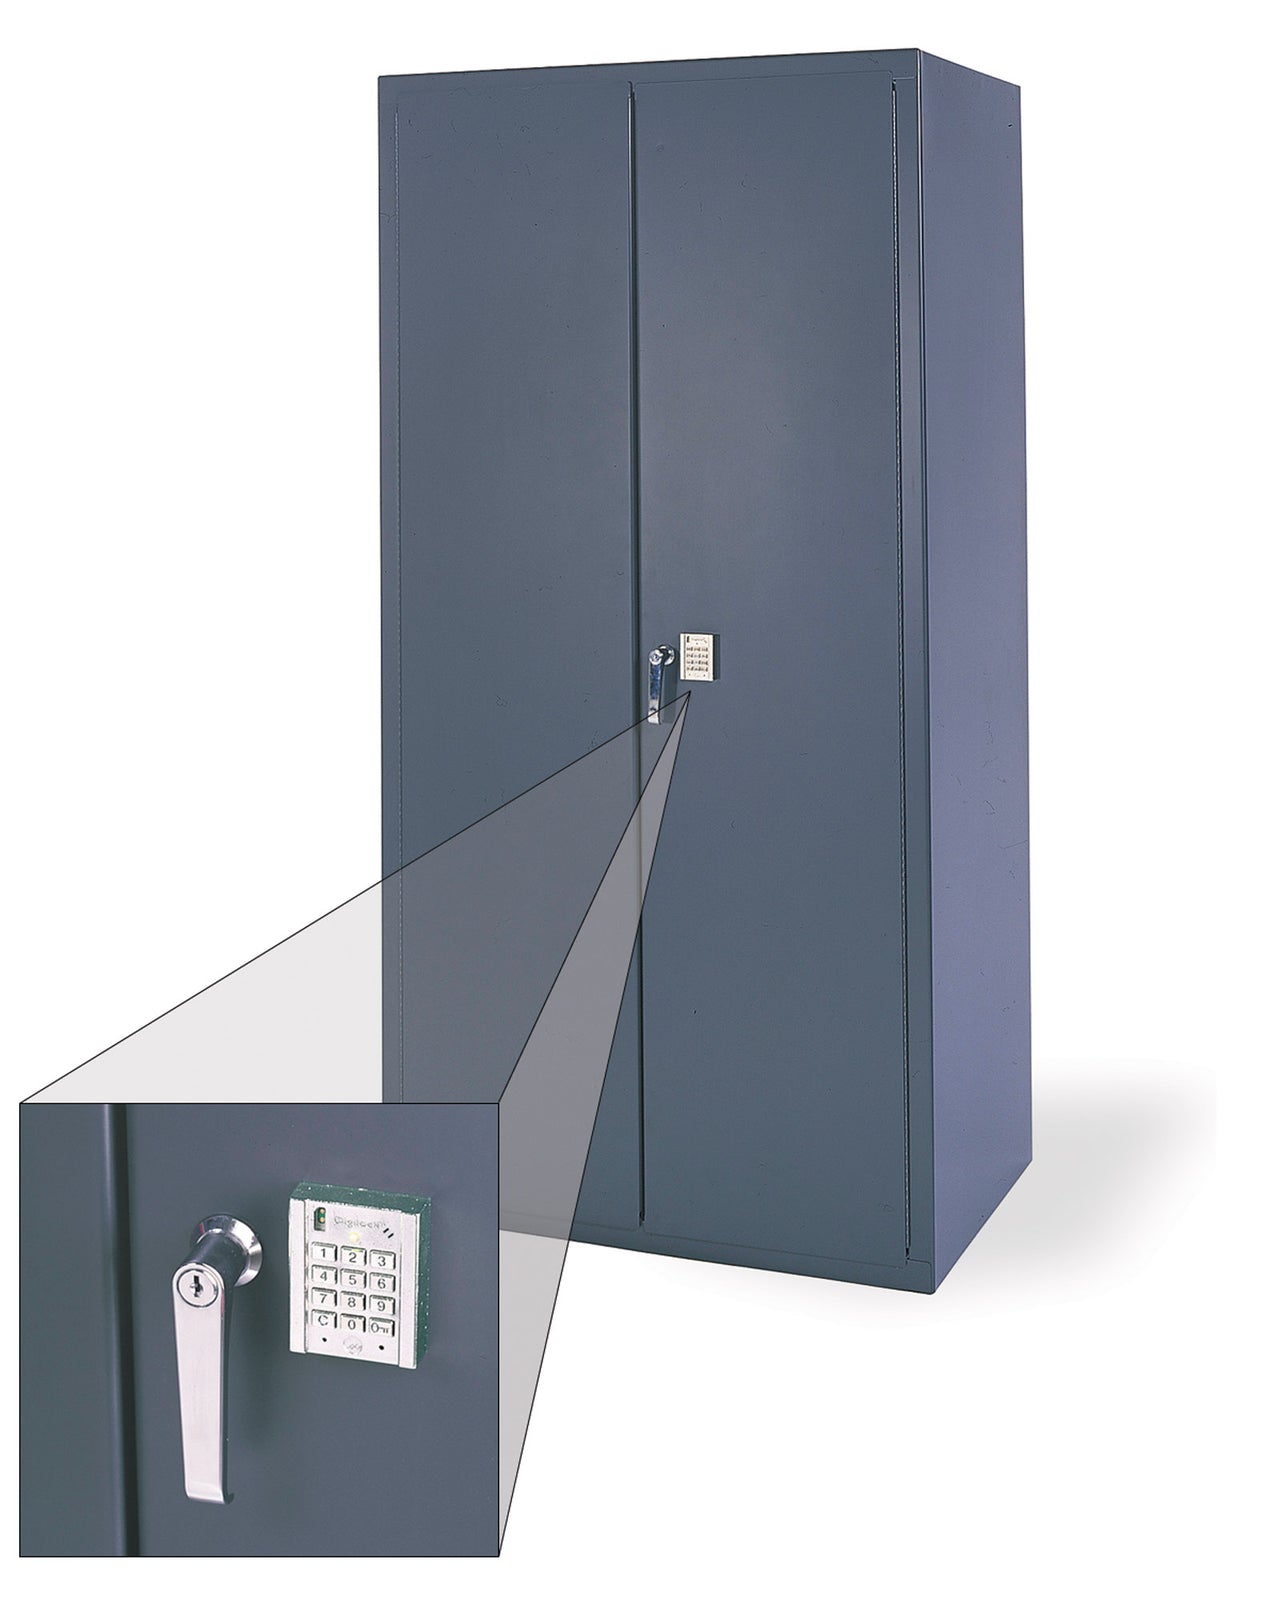 Vari-Tuff Electronic Locking Cabinet, 48" x 24" x 78", Charcoal Flush, 8 Shelves